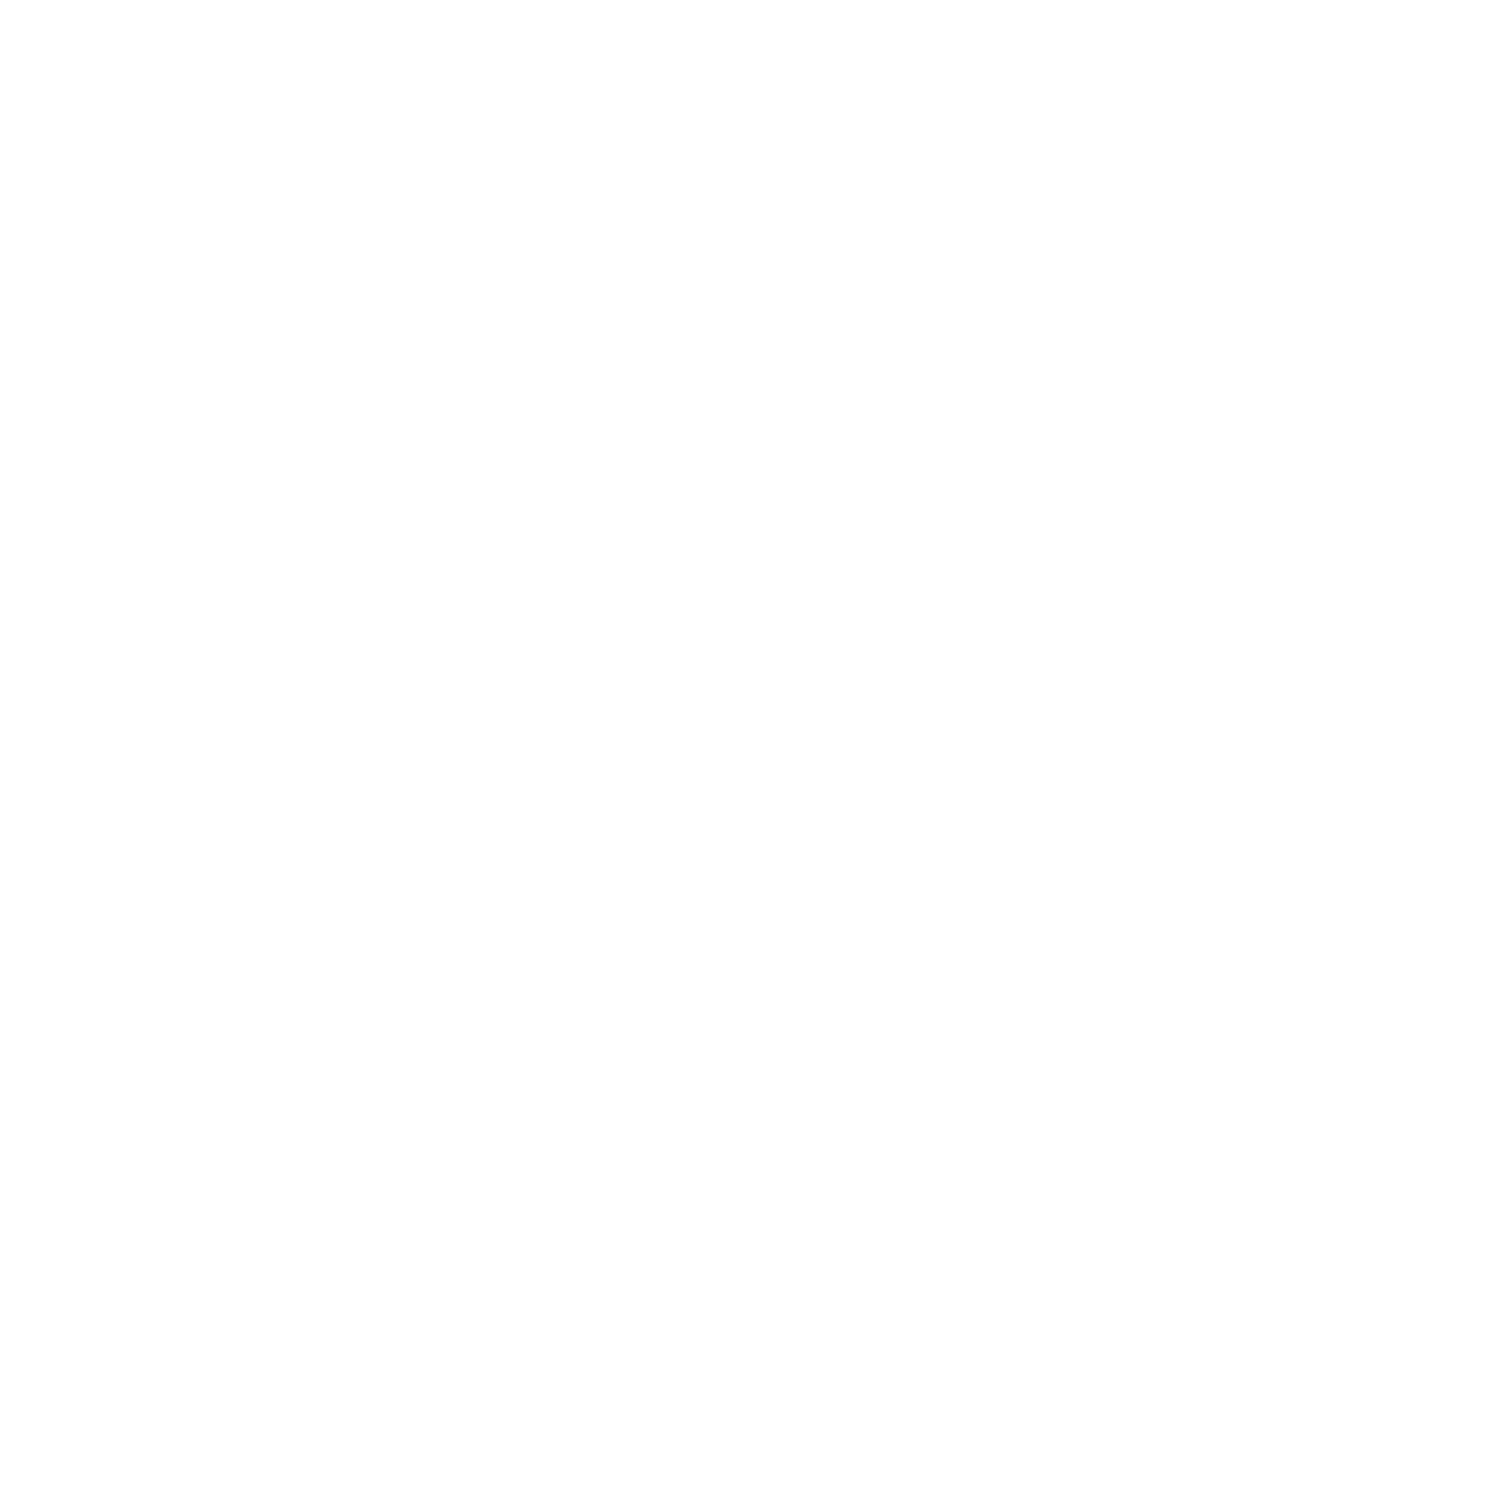 Das offizielle Kubaforum